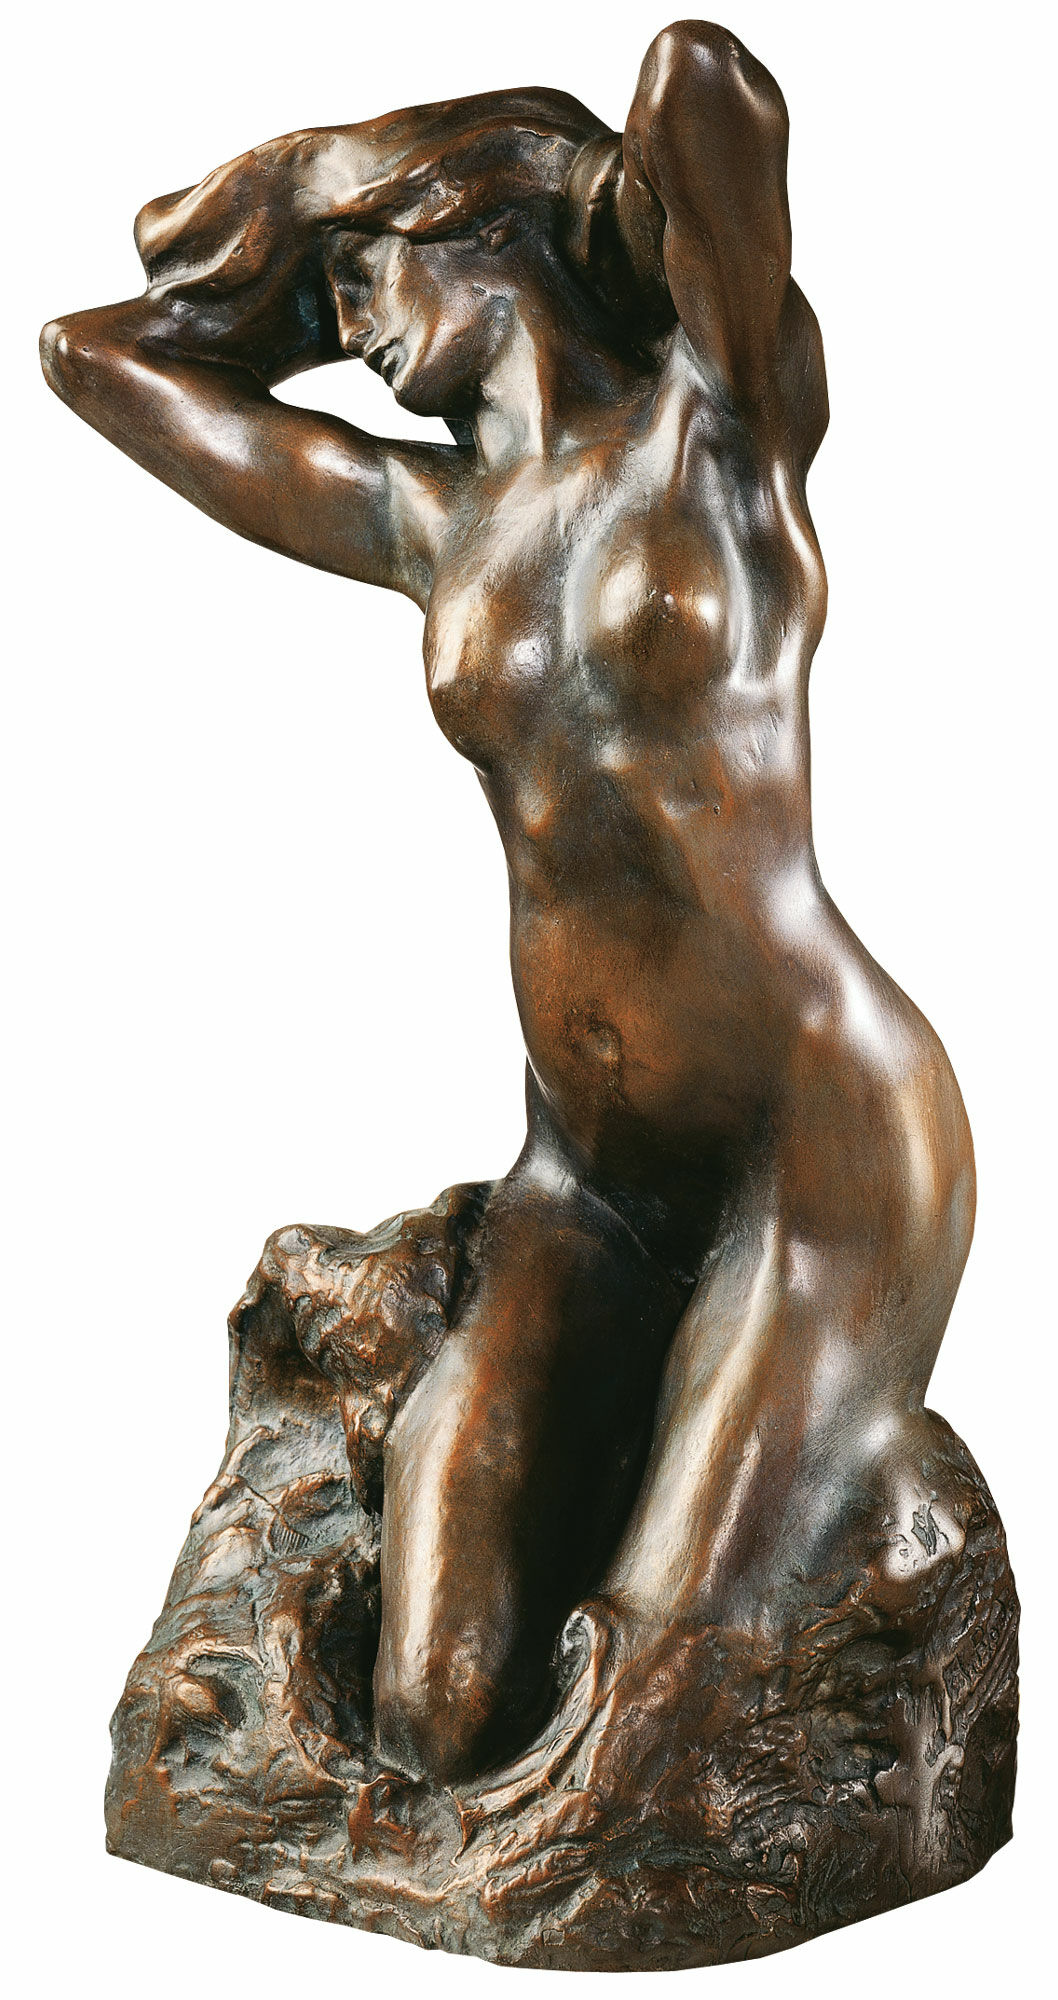 Sculpture "Baigneuse" (1880), bonded bronze version by Auguste Rodin